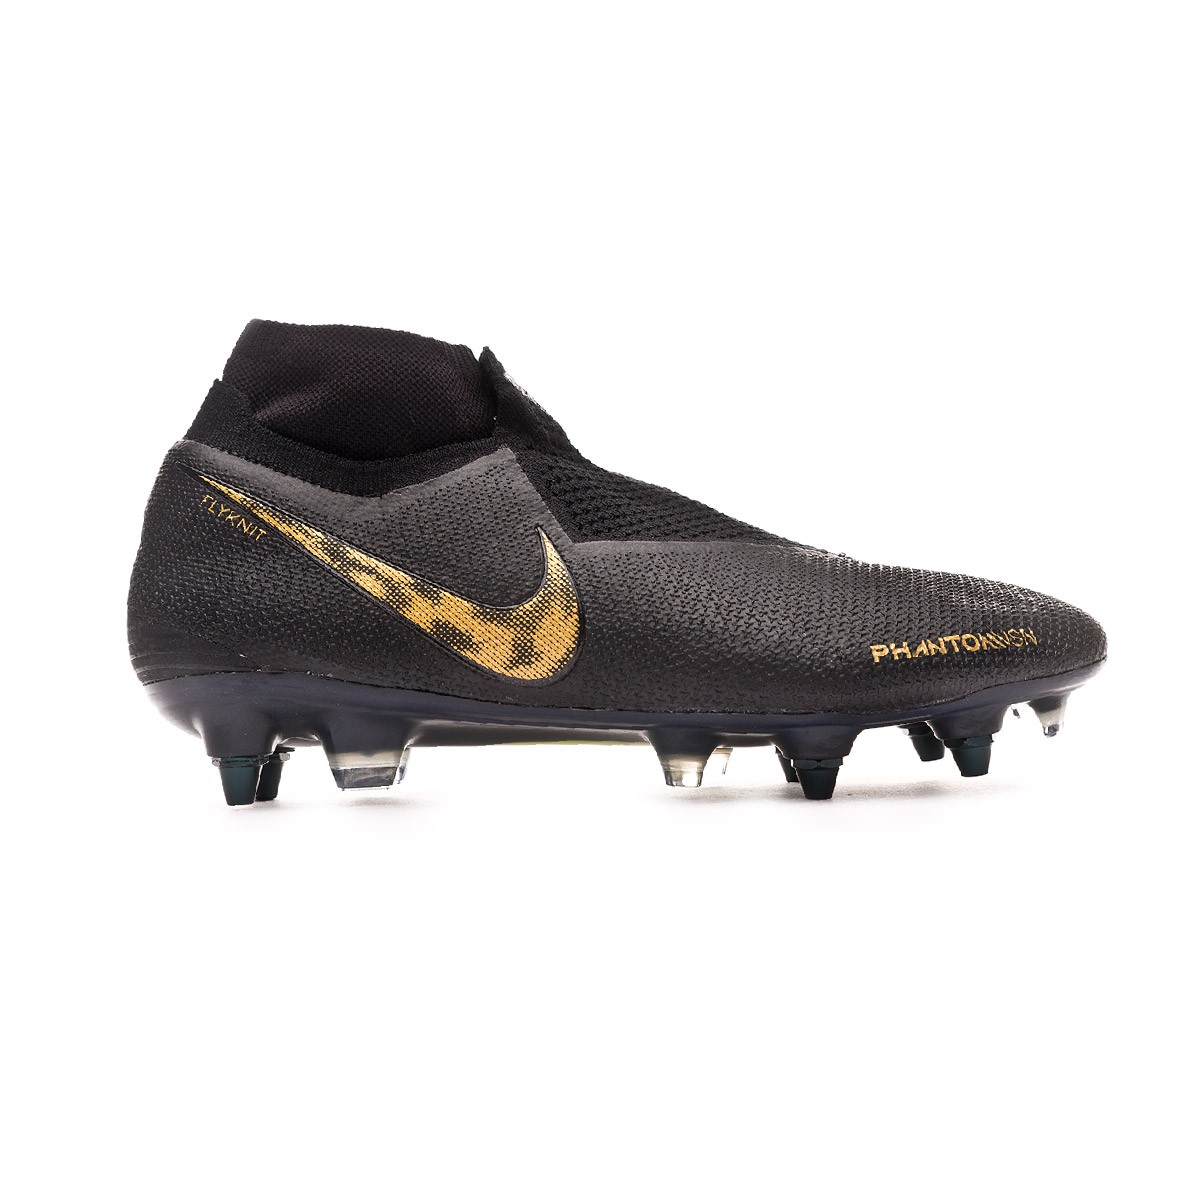 nike phantom football boots black and gold